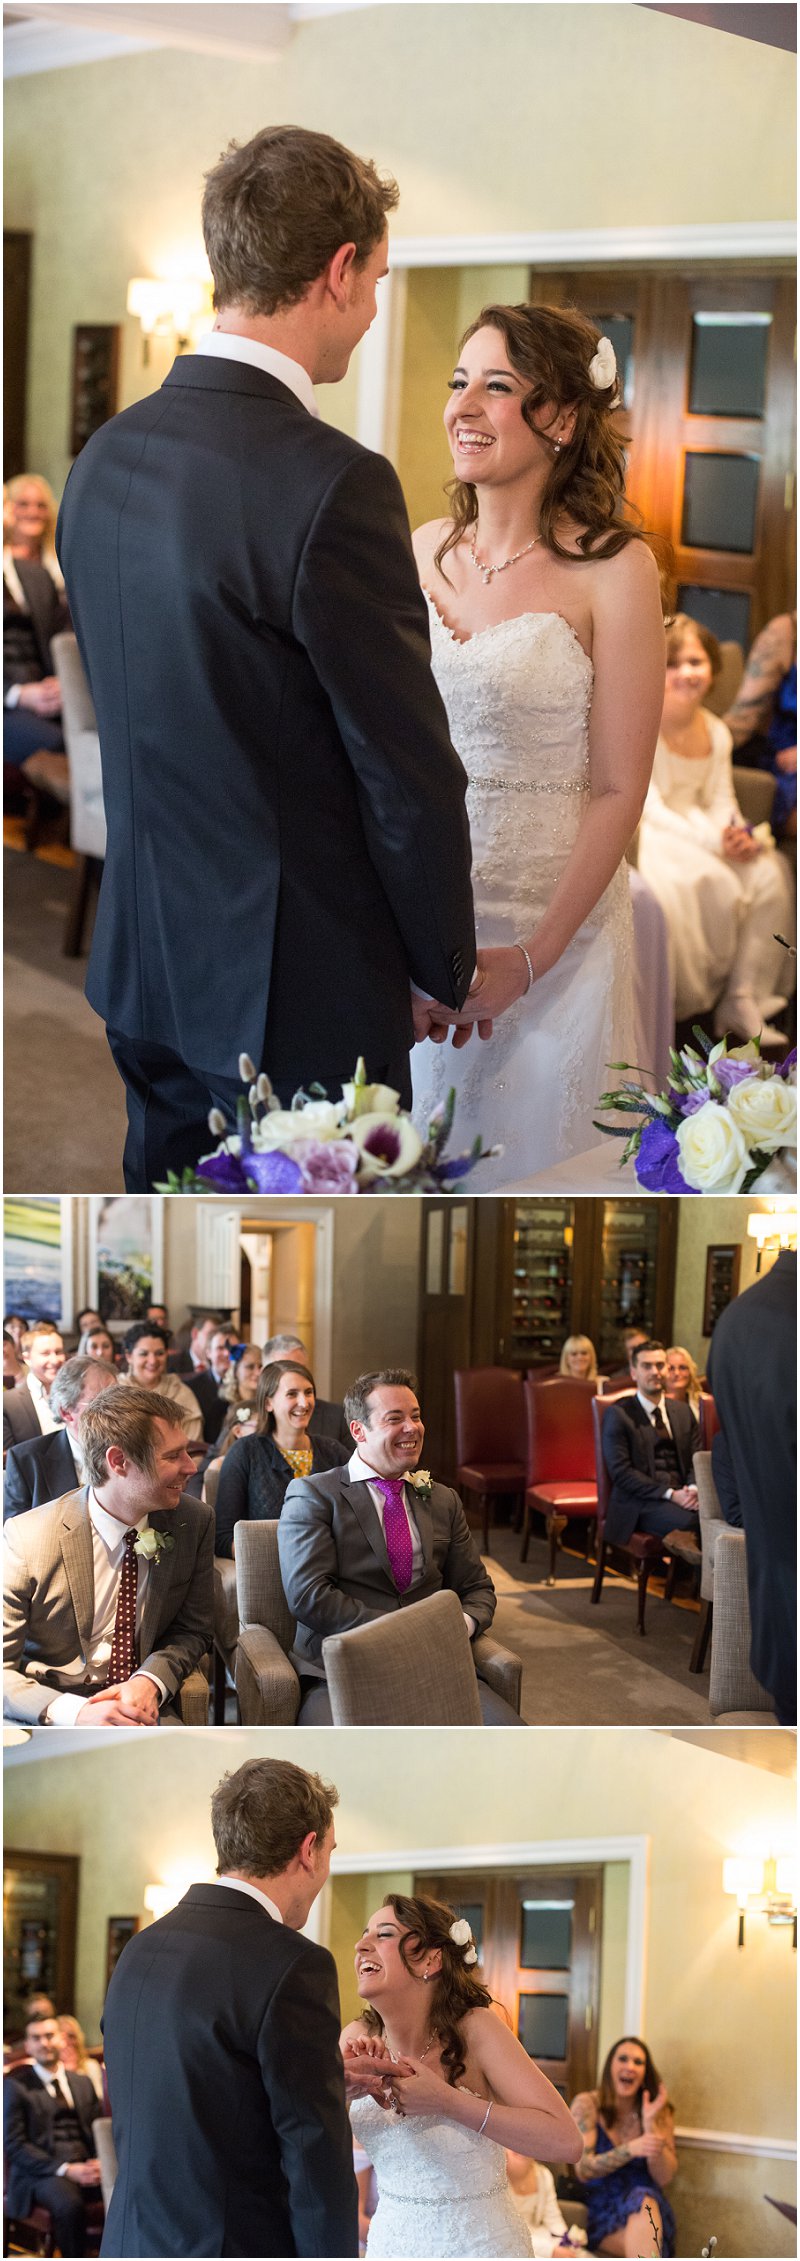 Wedding Ceremony at Linthwaite Hotel Cumbria